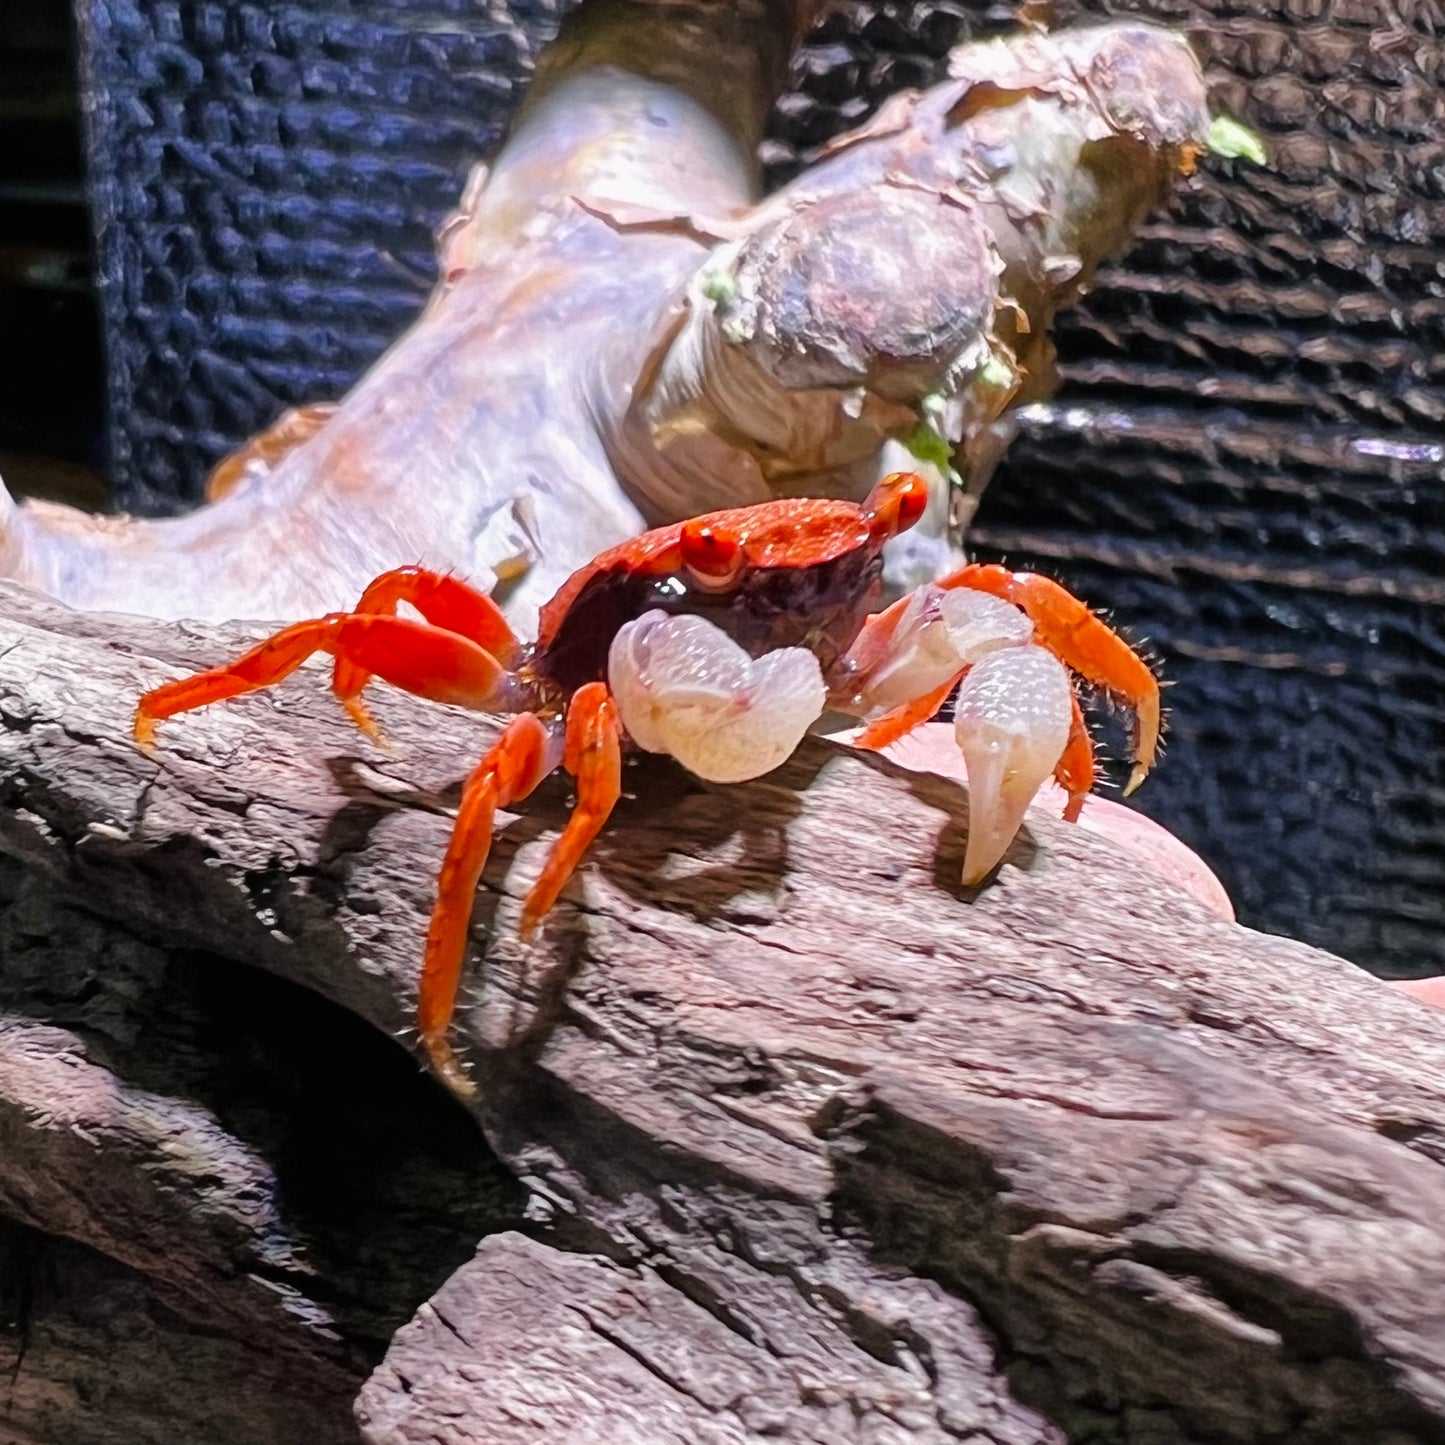 Red Carnaval Vampire Crab (Geosesarma aristocratensis)